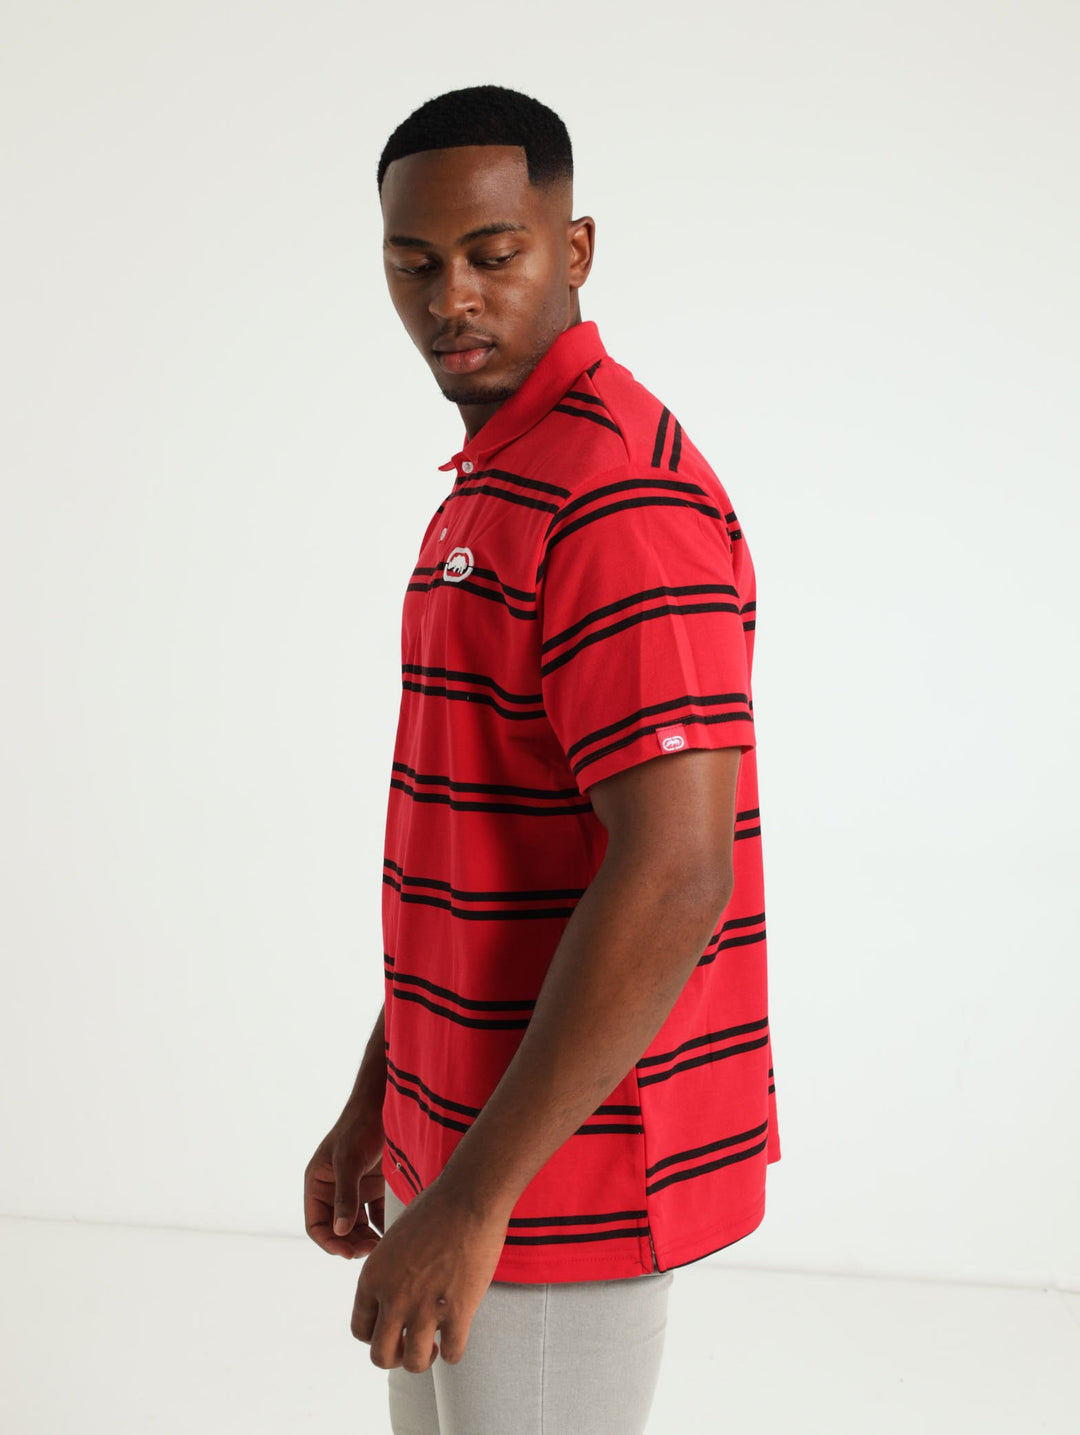 Stripe Embossed Golfer - Red